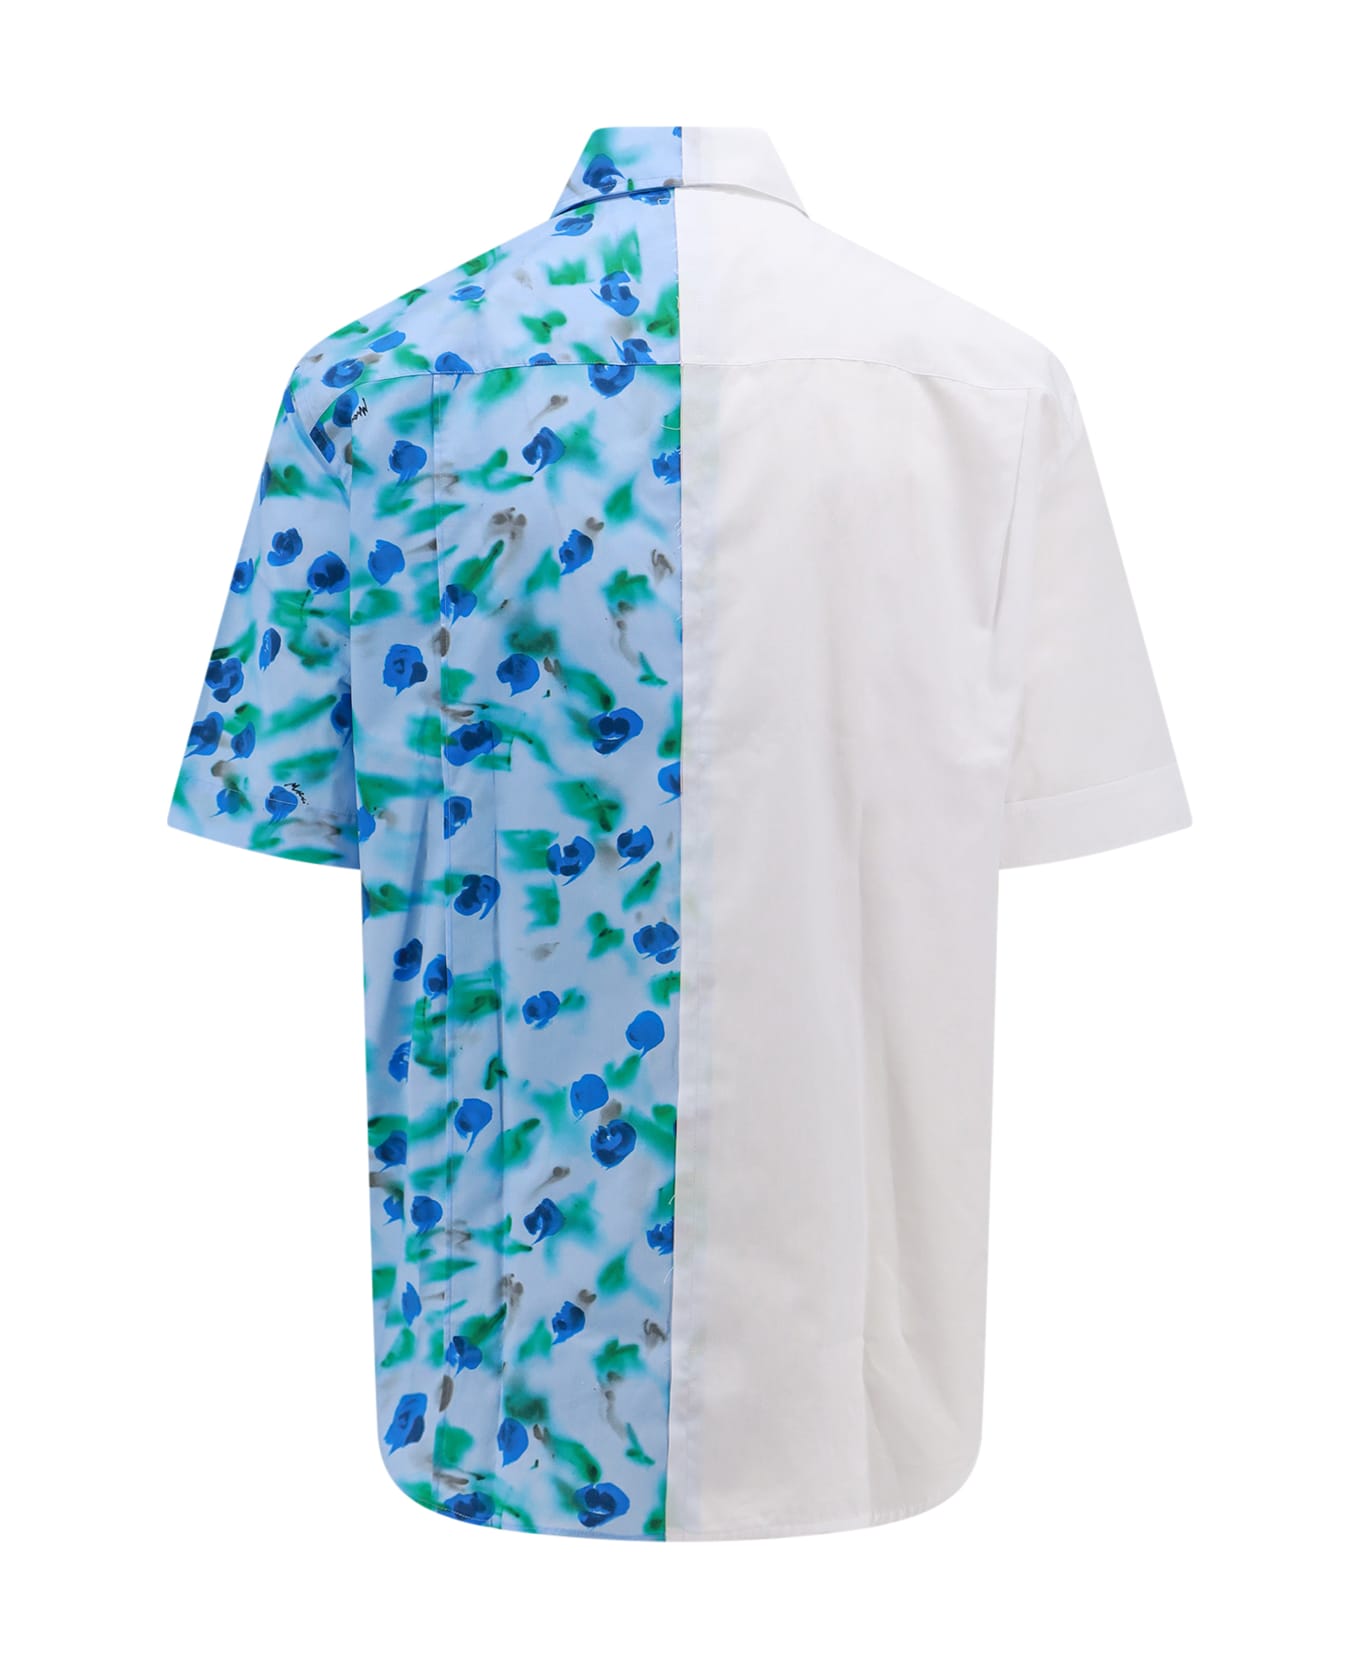 Marni Shirt - BLUE/WHITE